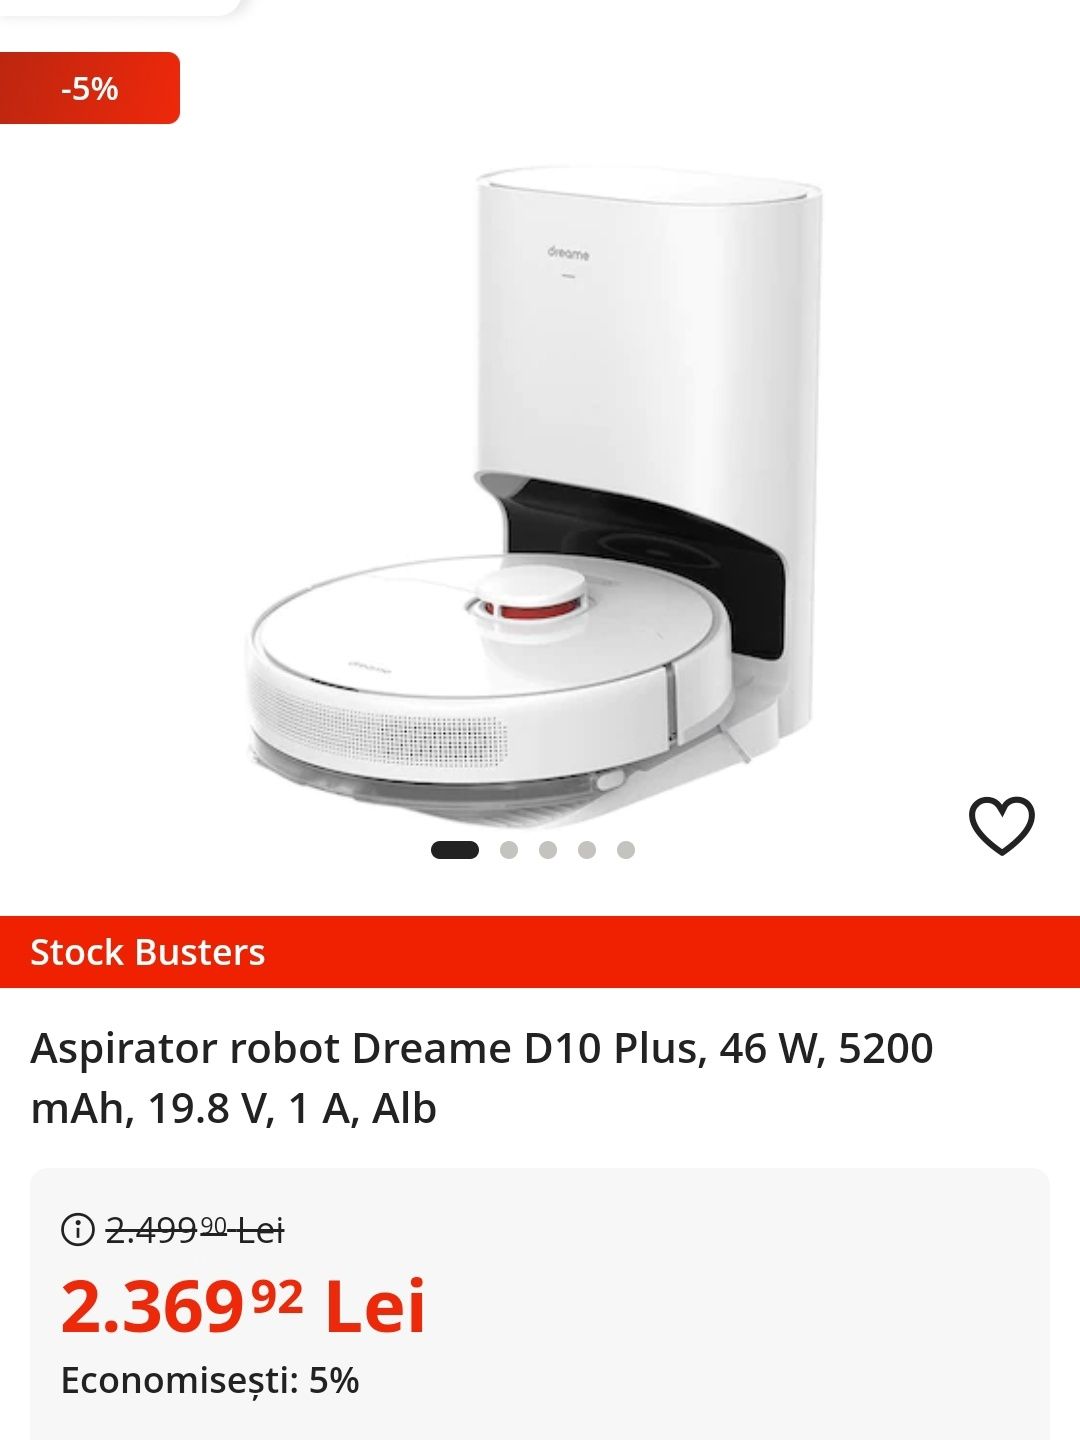 Aspirator robot Dreame D10 Plus, 46 W, 5200 mAh, 19.8 V, 1 A, Alb